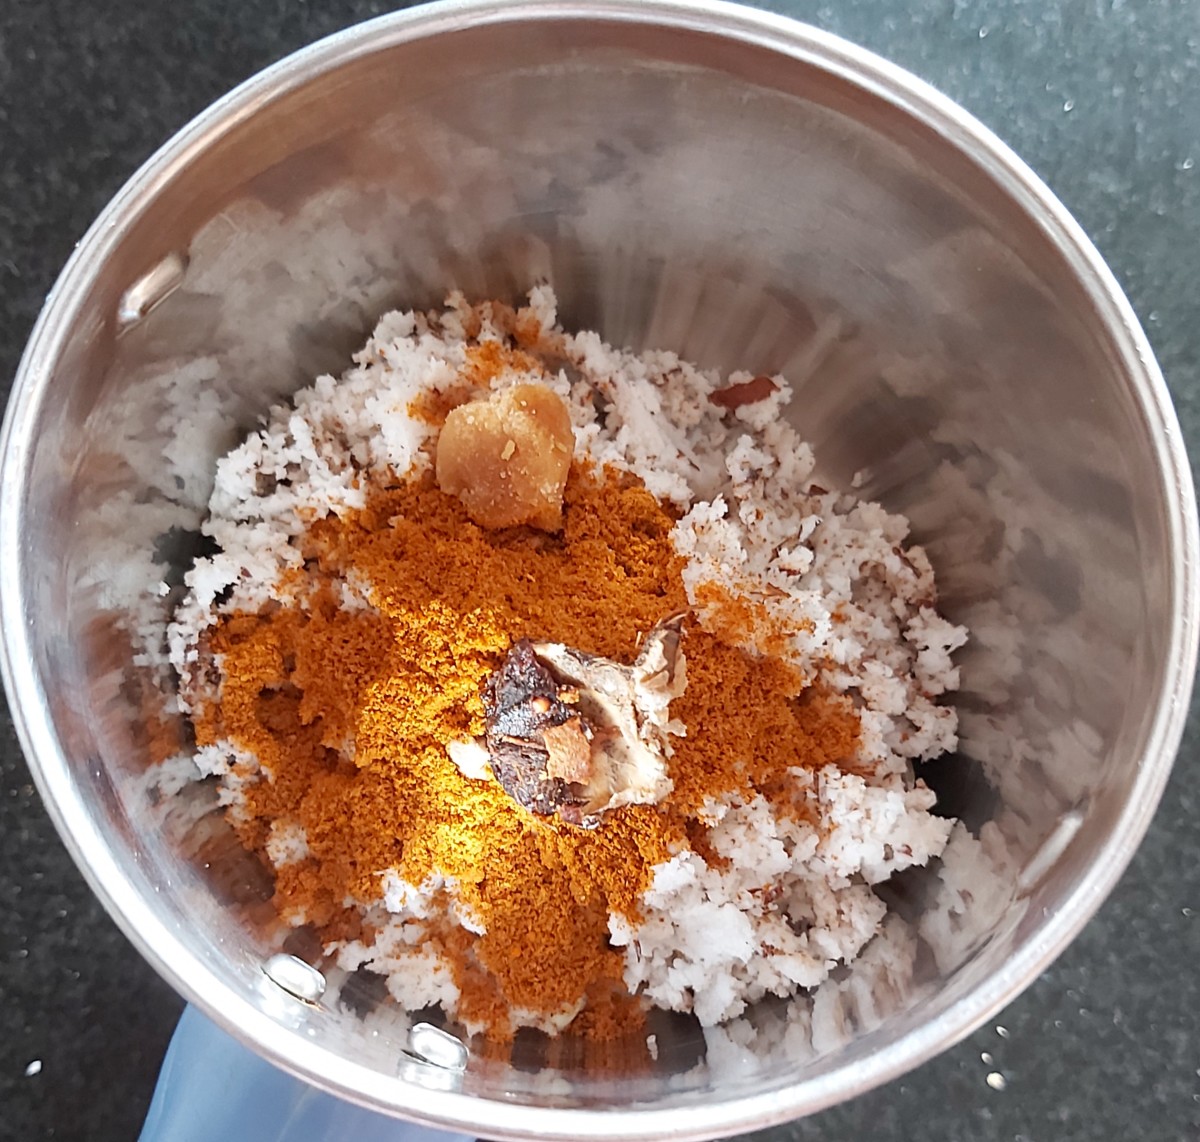 Add 1-2 teaspoons of sambar powder (homemade or store-bought), 1/2 teaspoon of tamarind pulp and 1/2 teaspoon of jaggery.